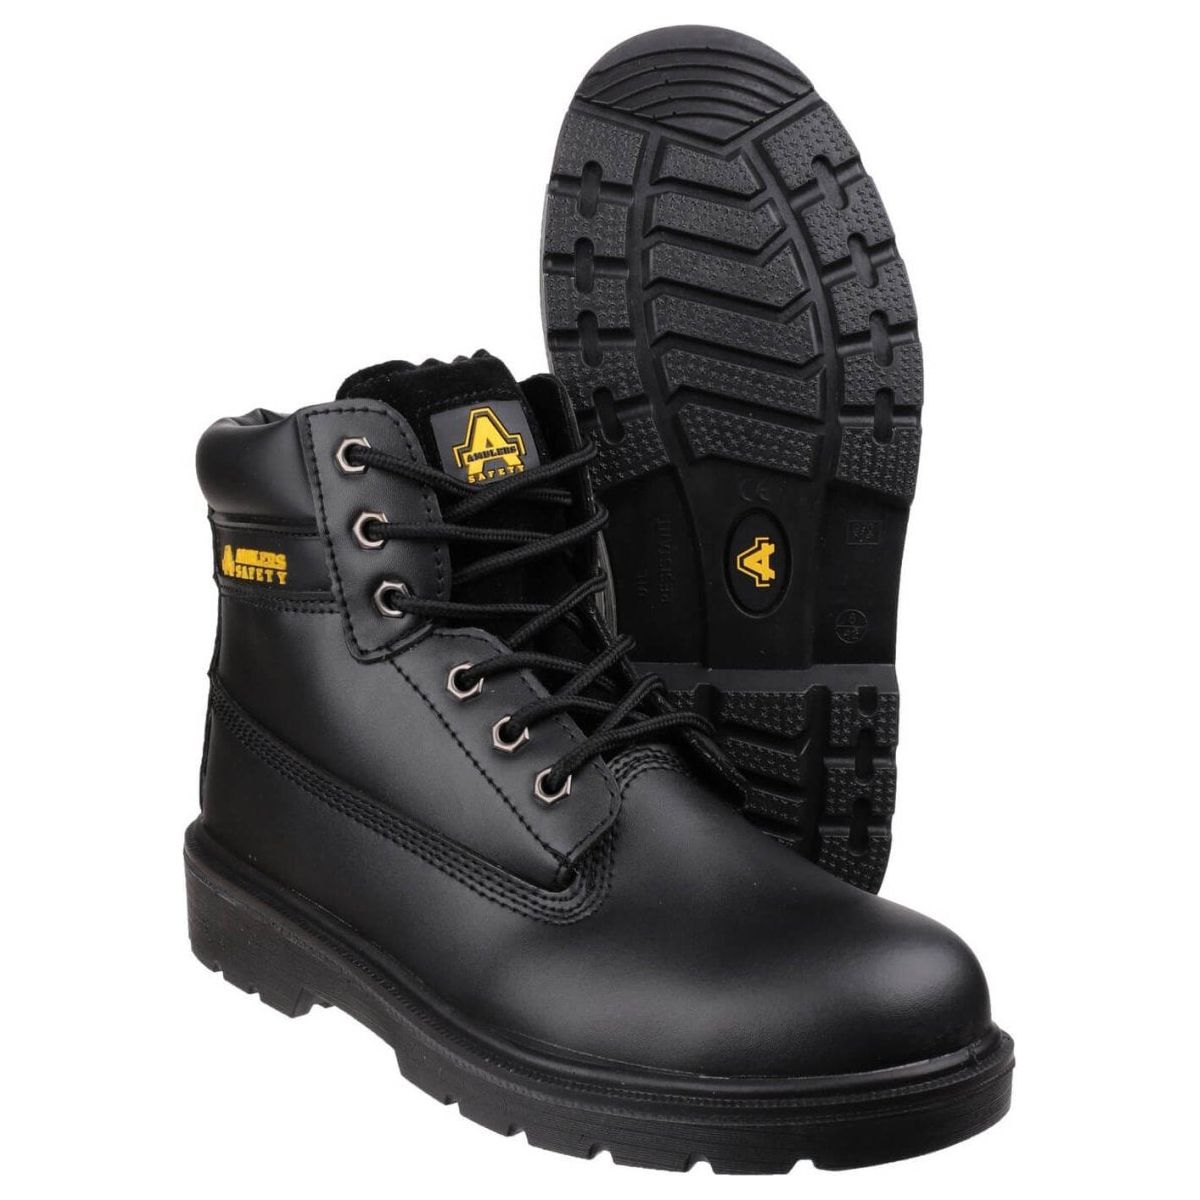 Amblers Fs112 Safety Boots Womens - workweargurus.com